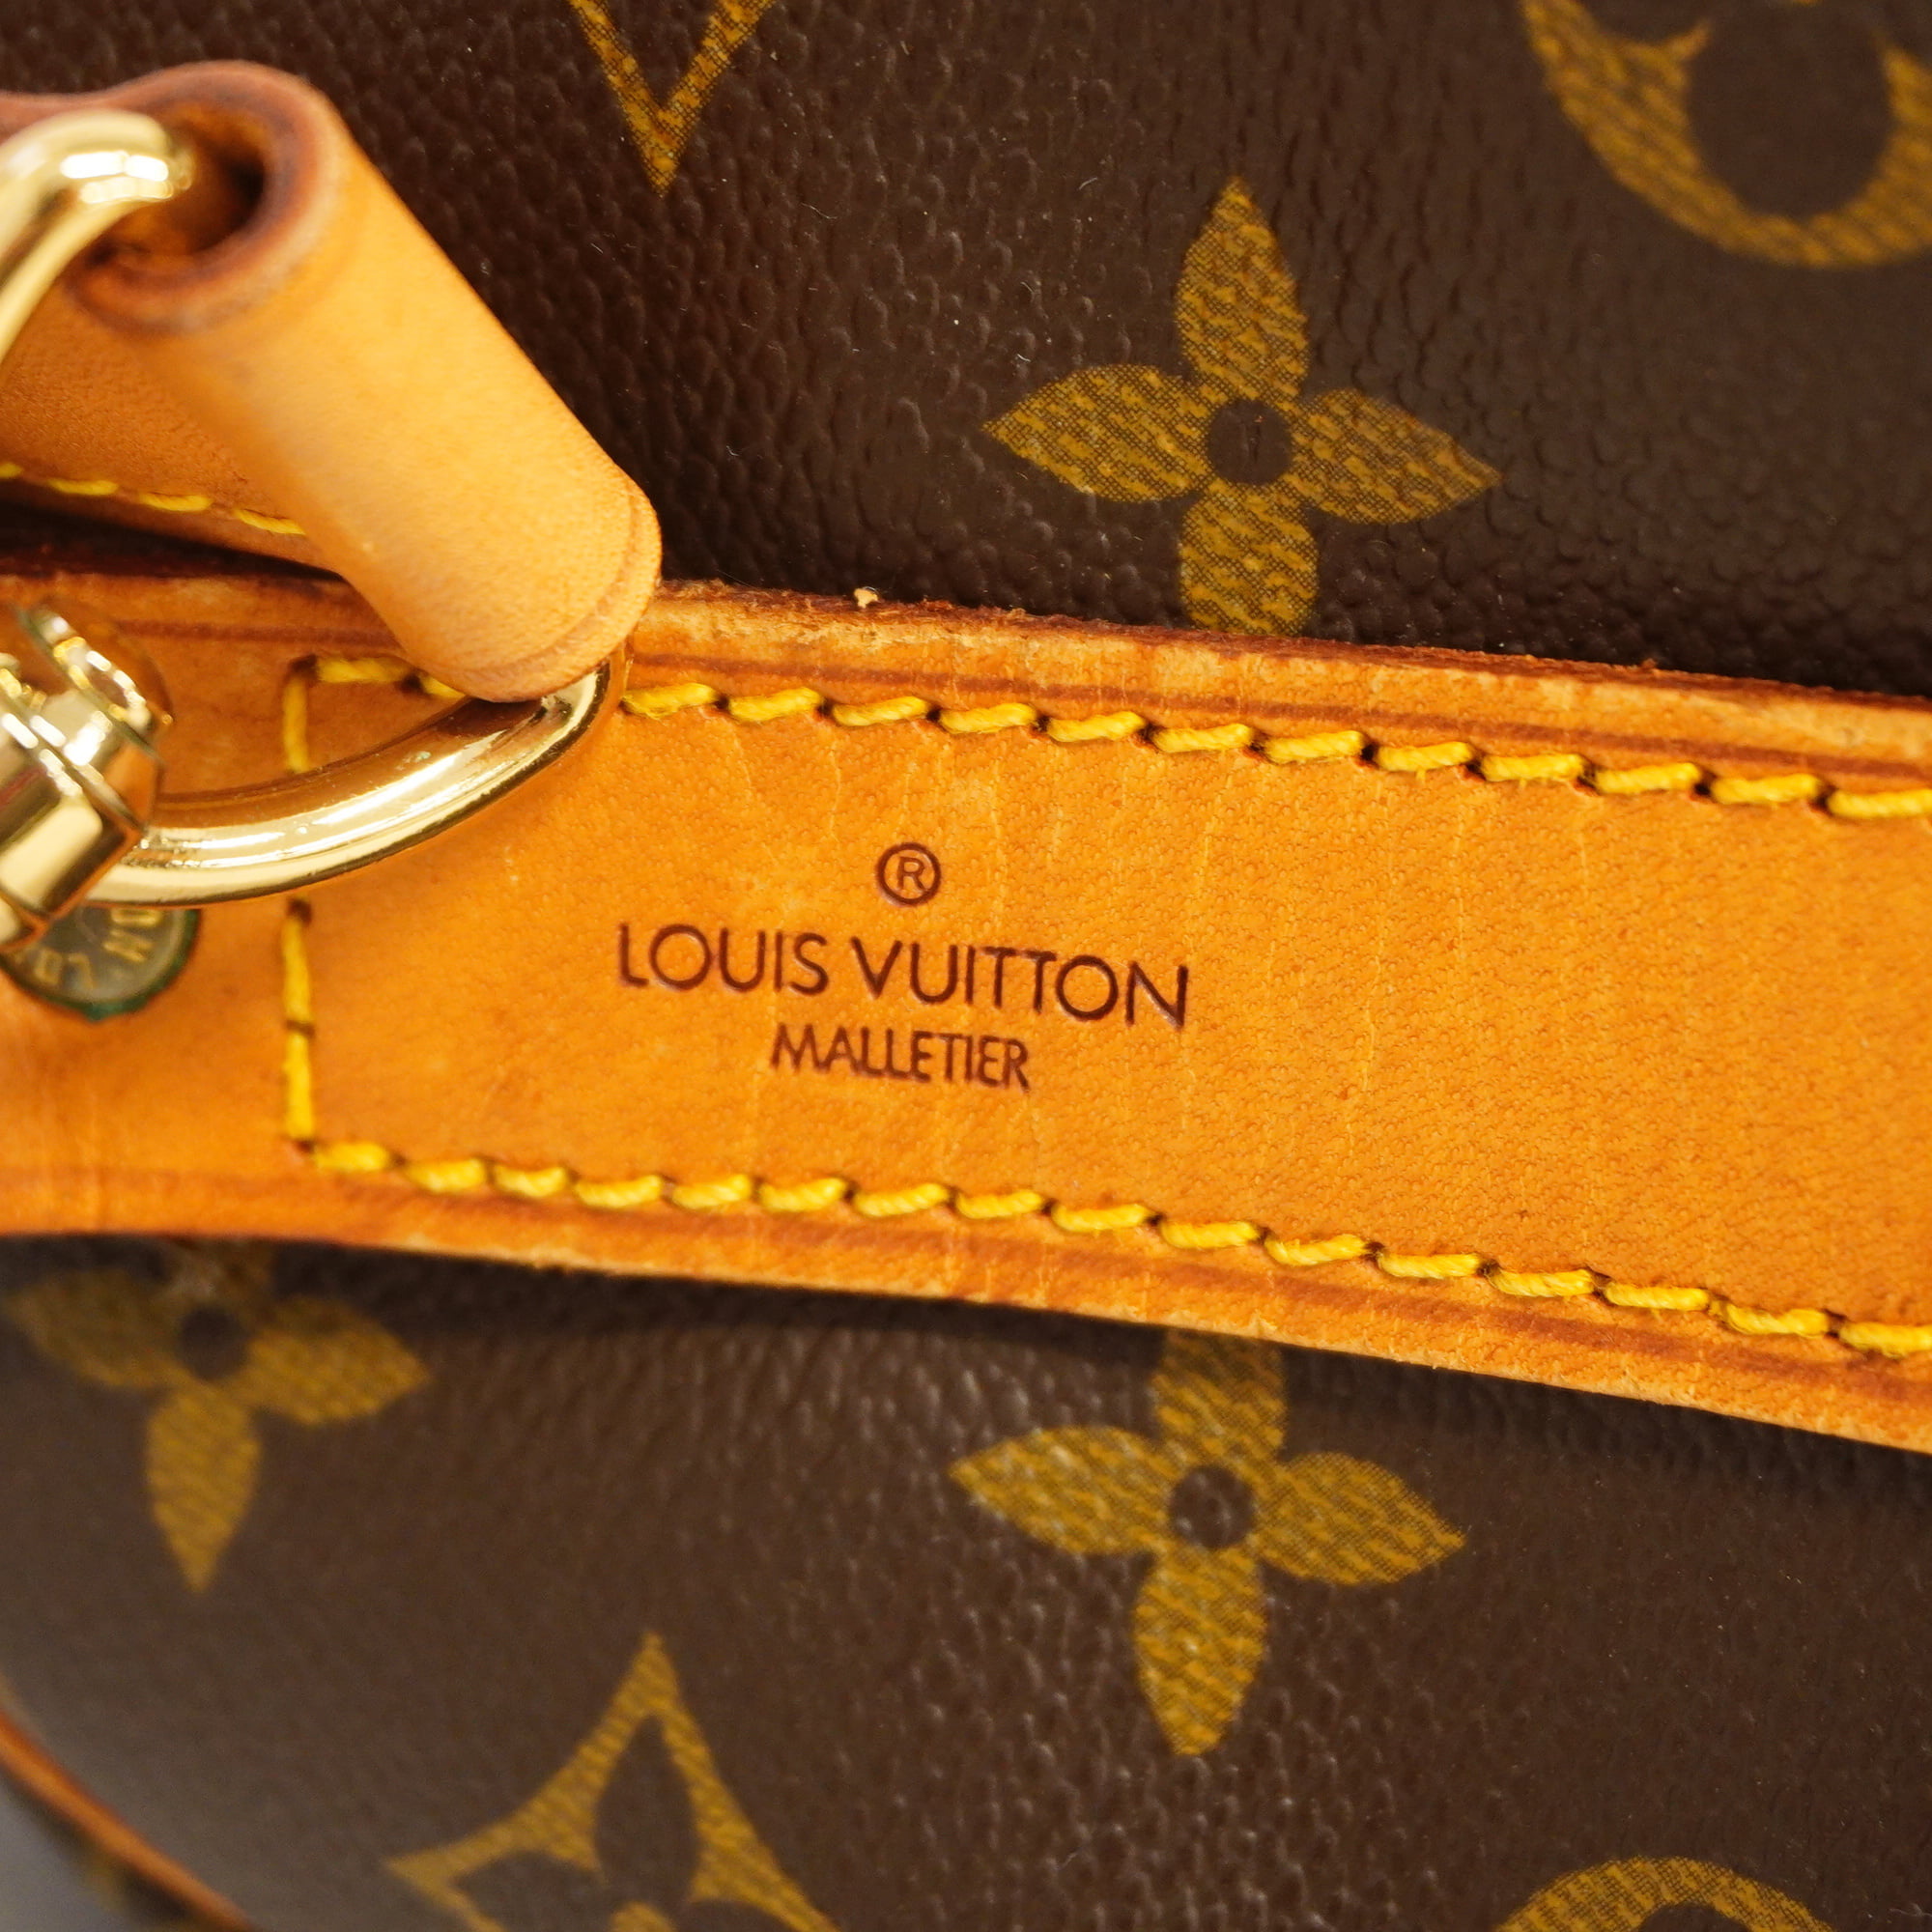 Auth Louis Vuitton Monogram Pochette Valmy Shoulder Bag M40524 Used